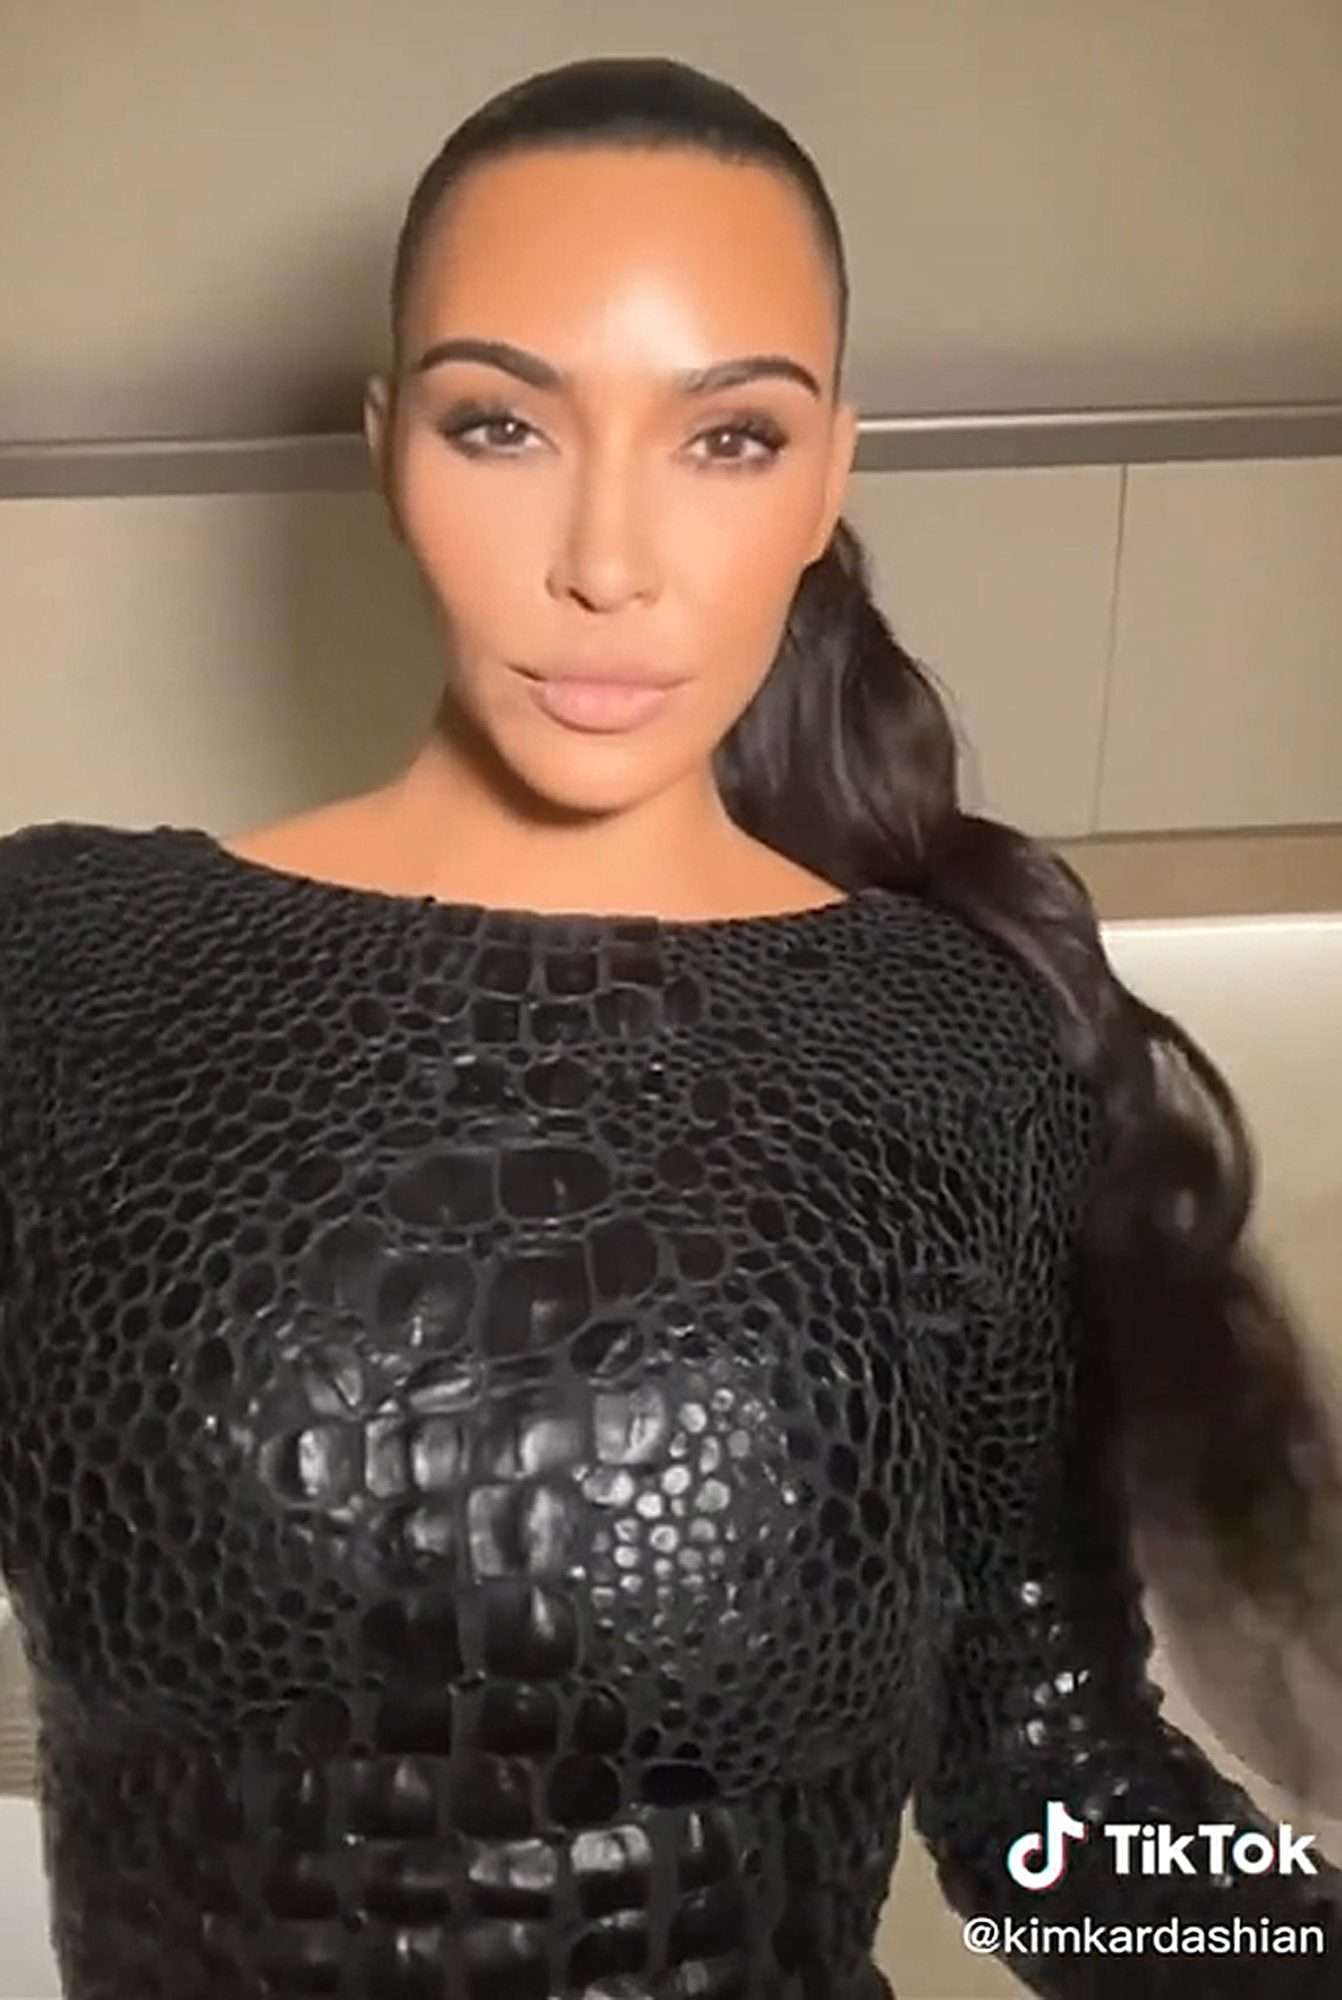 Kim Kardashian Makes Solo TikTok Debut with OG Glam Squad, Shows Off Long Black Nails